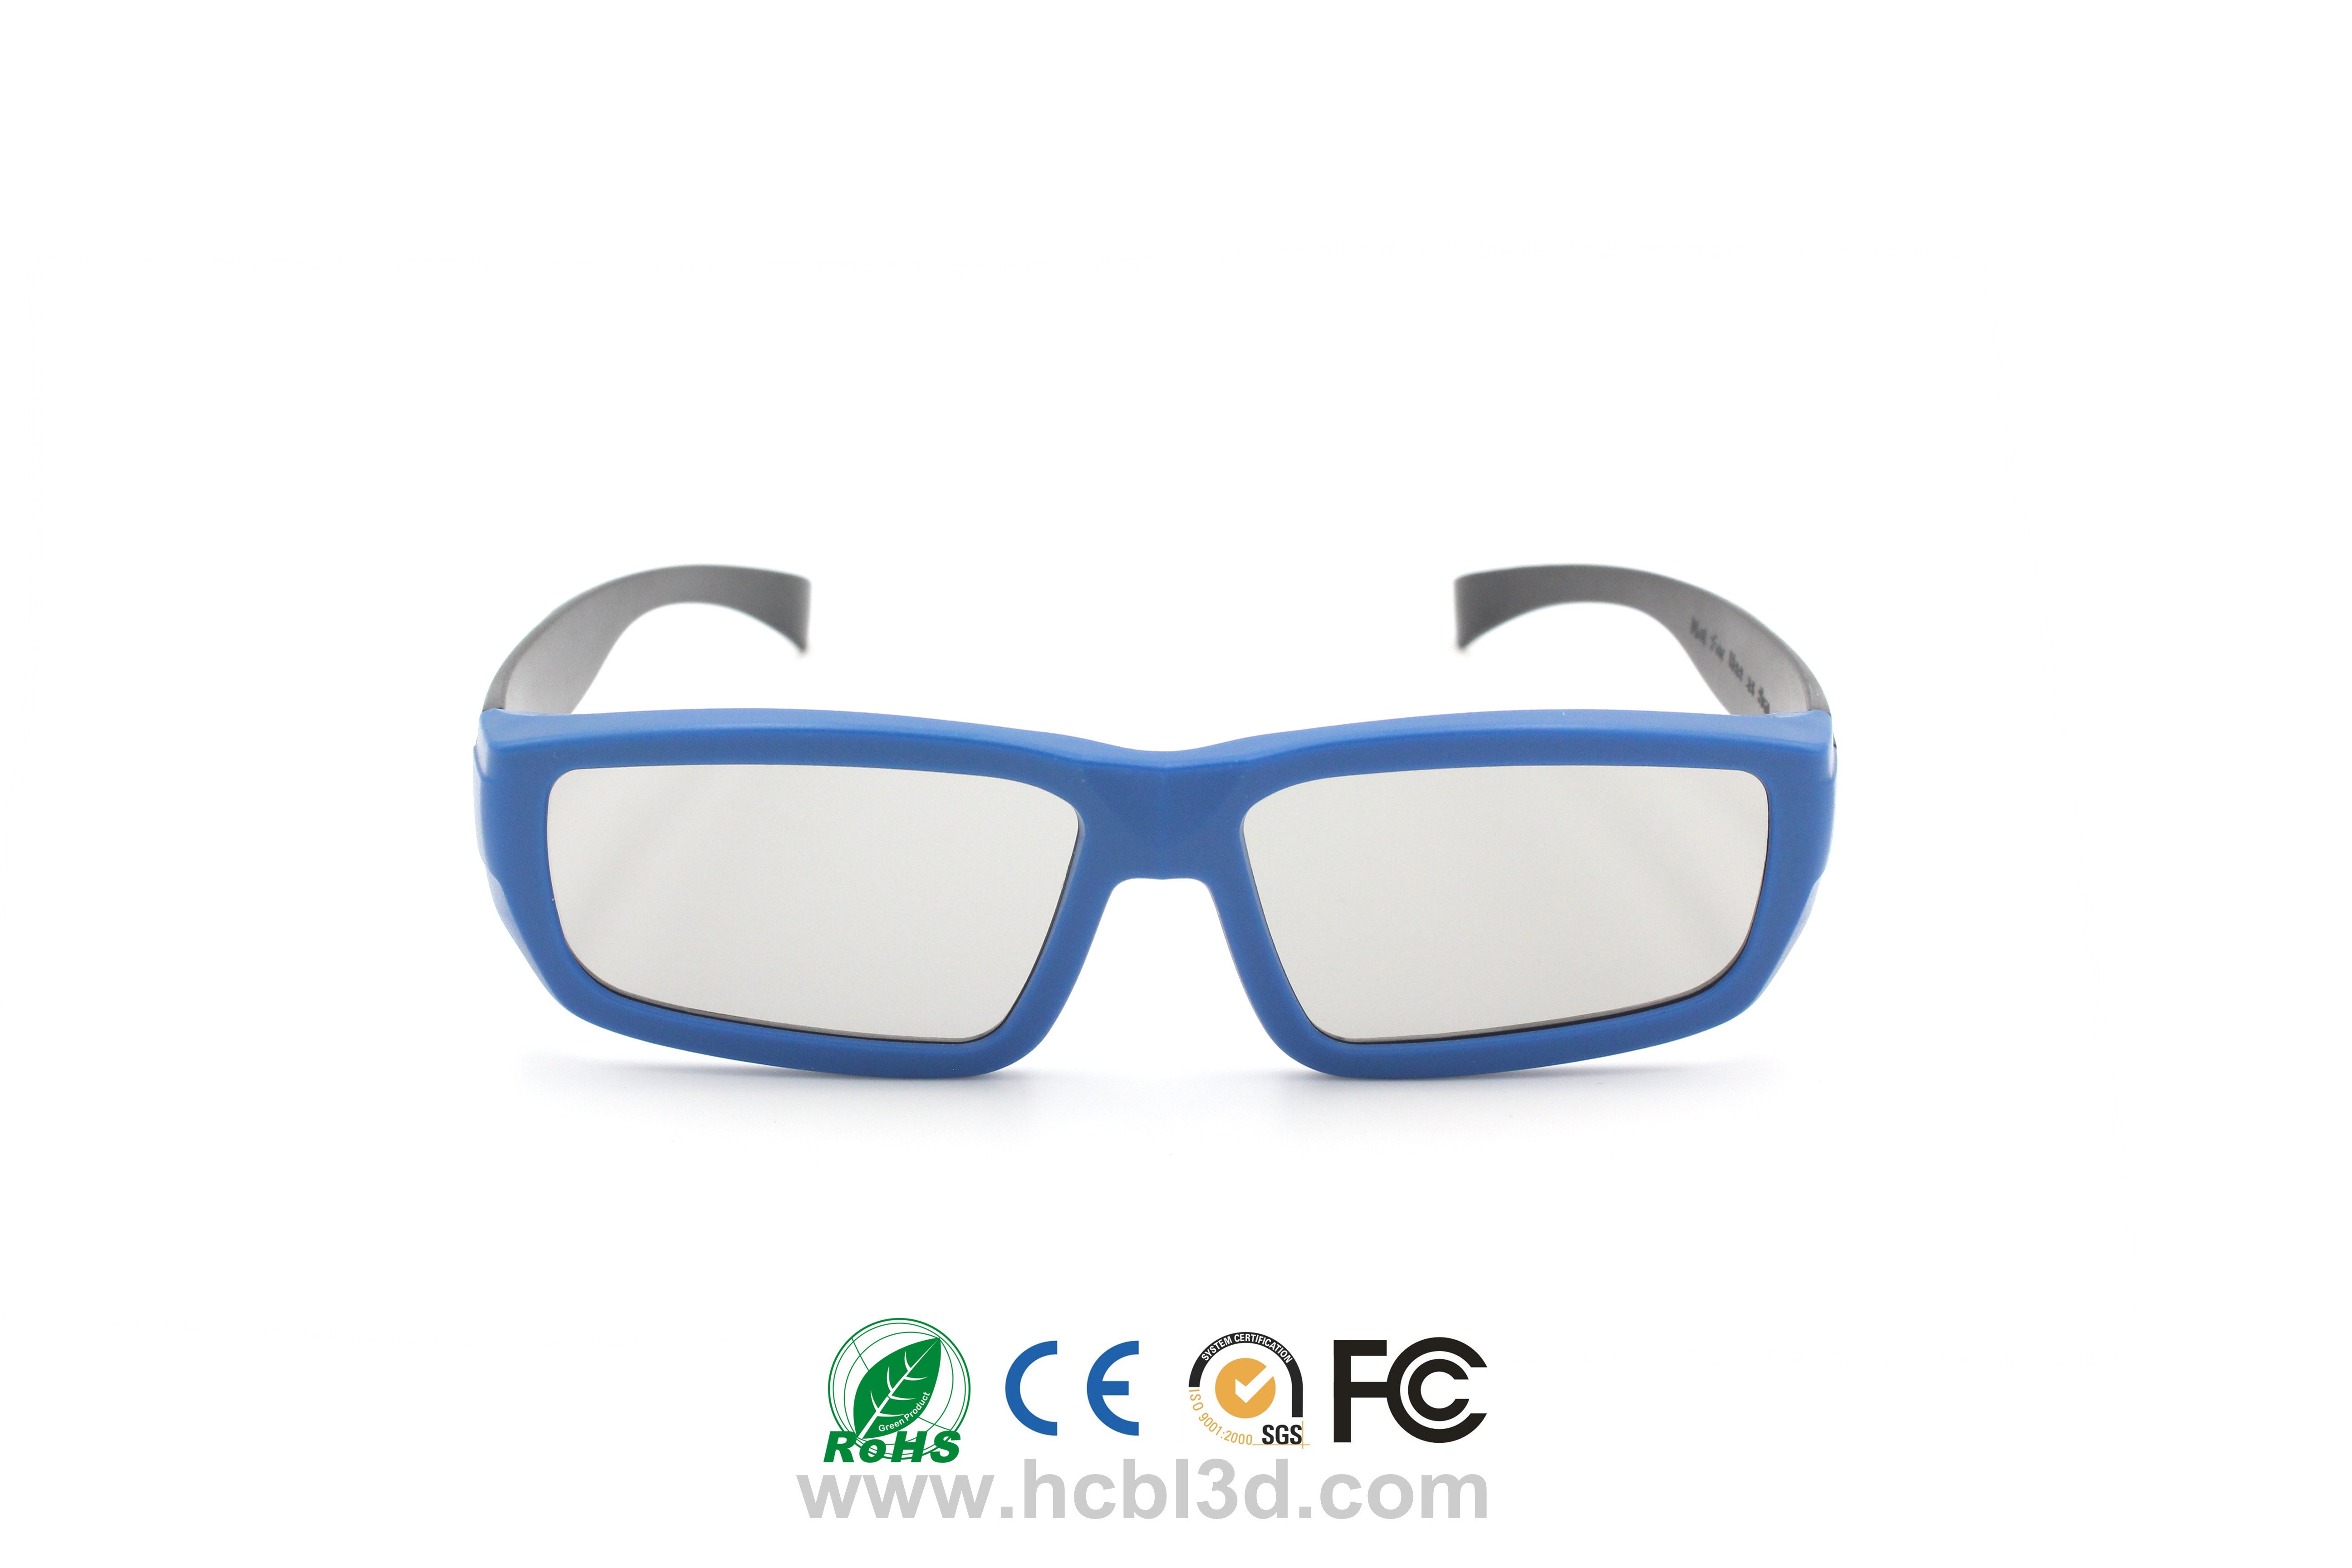 3D-Brille in Kindergröße, recycelbar, polarisierte 3D-Kinobrille